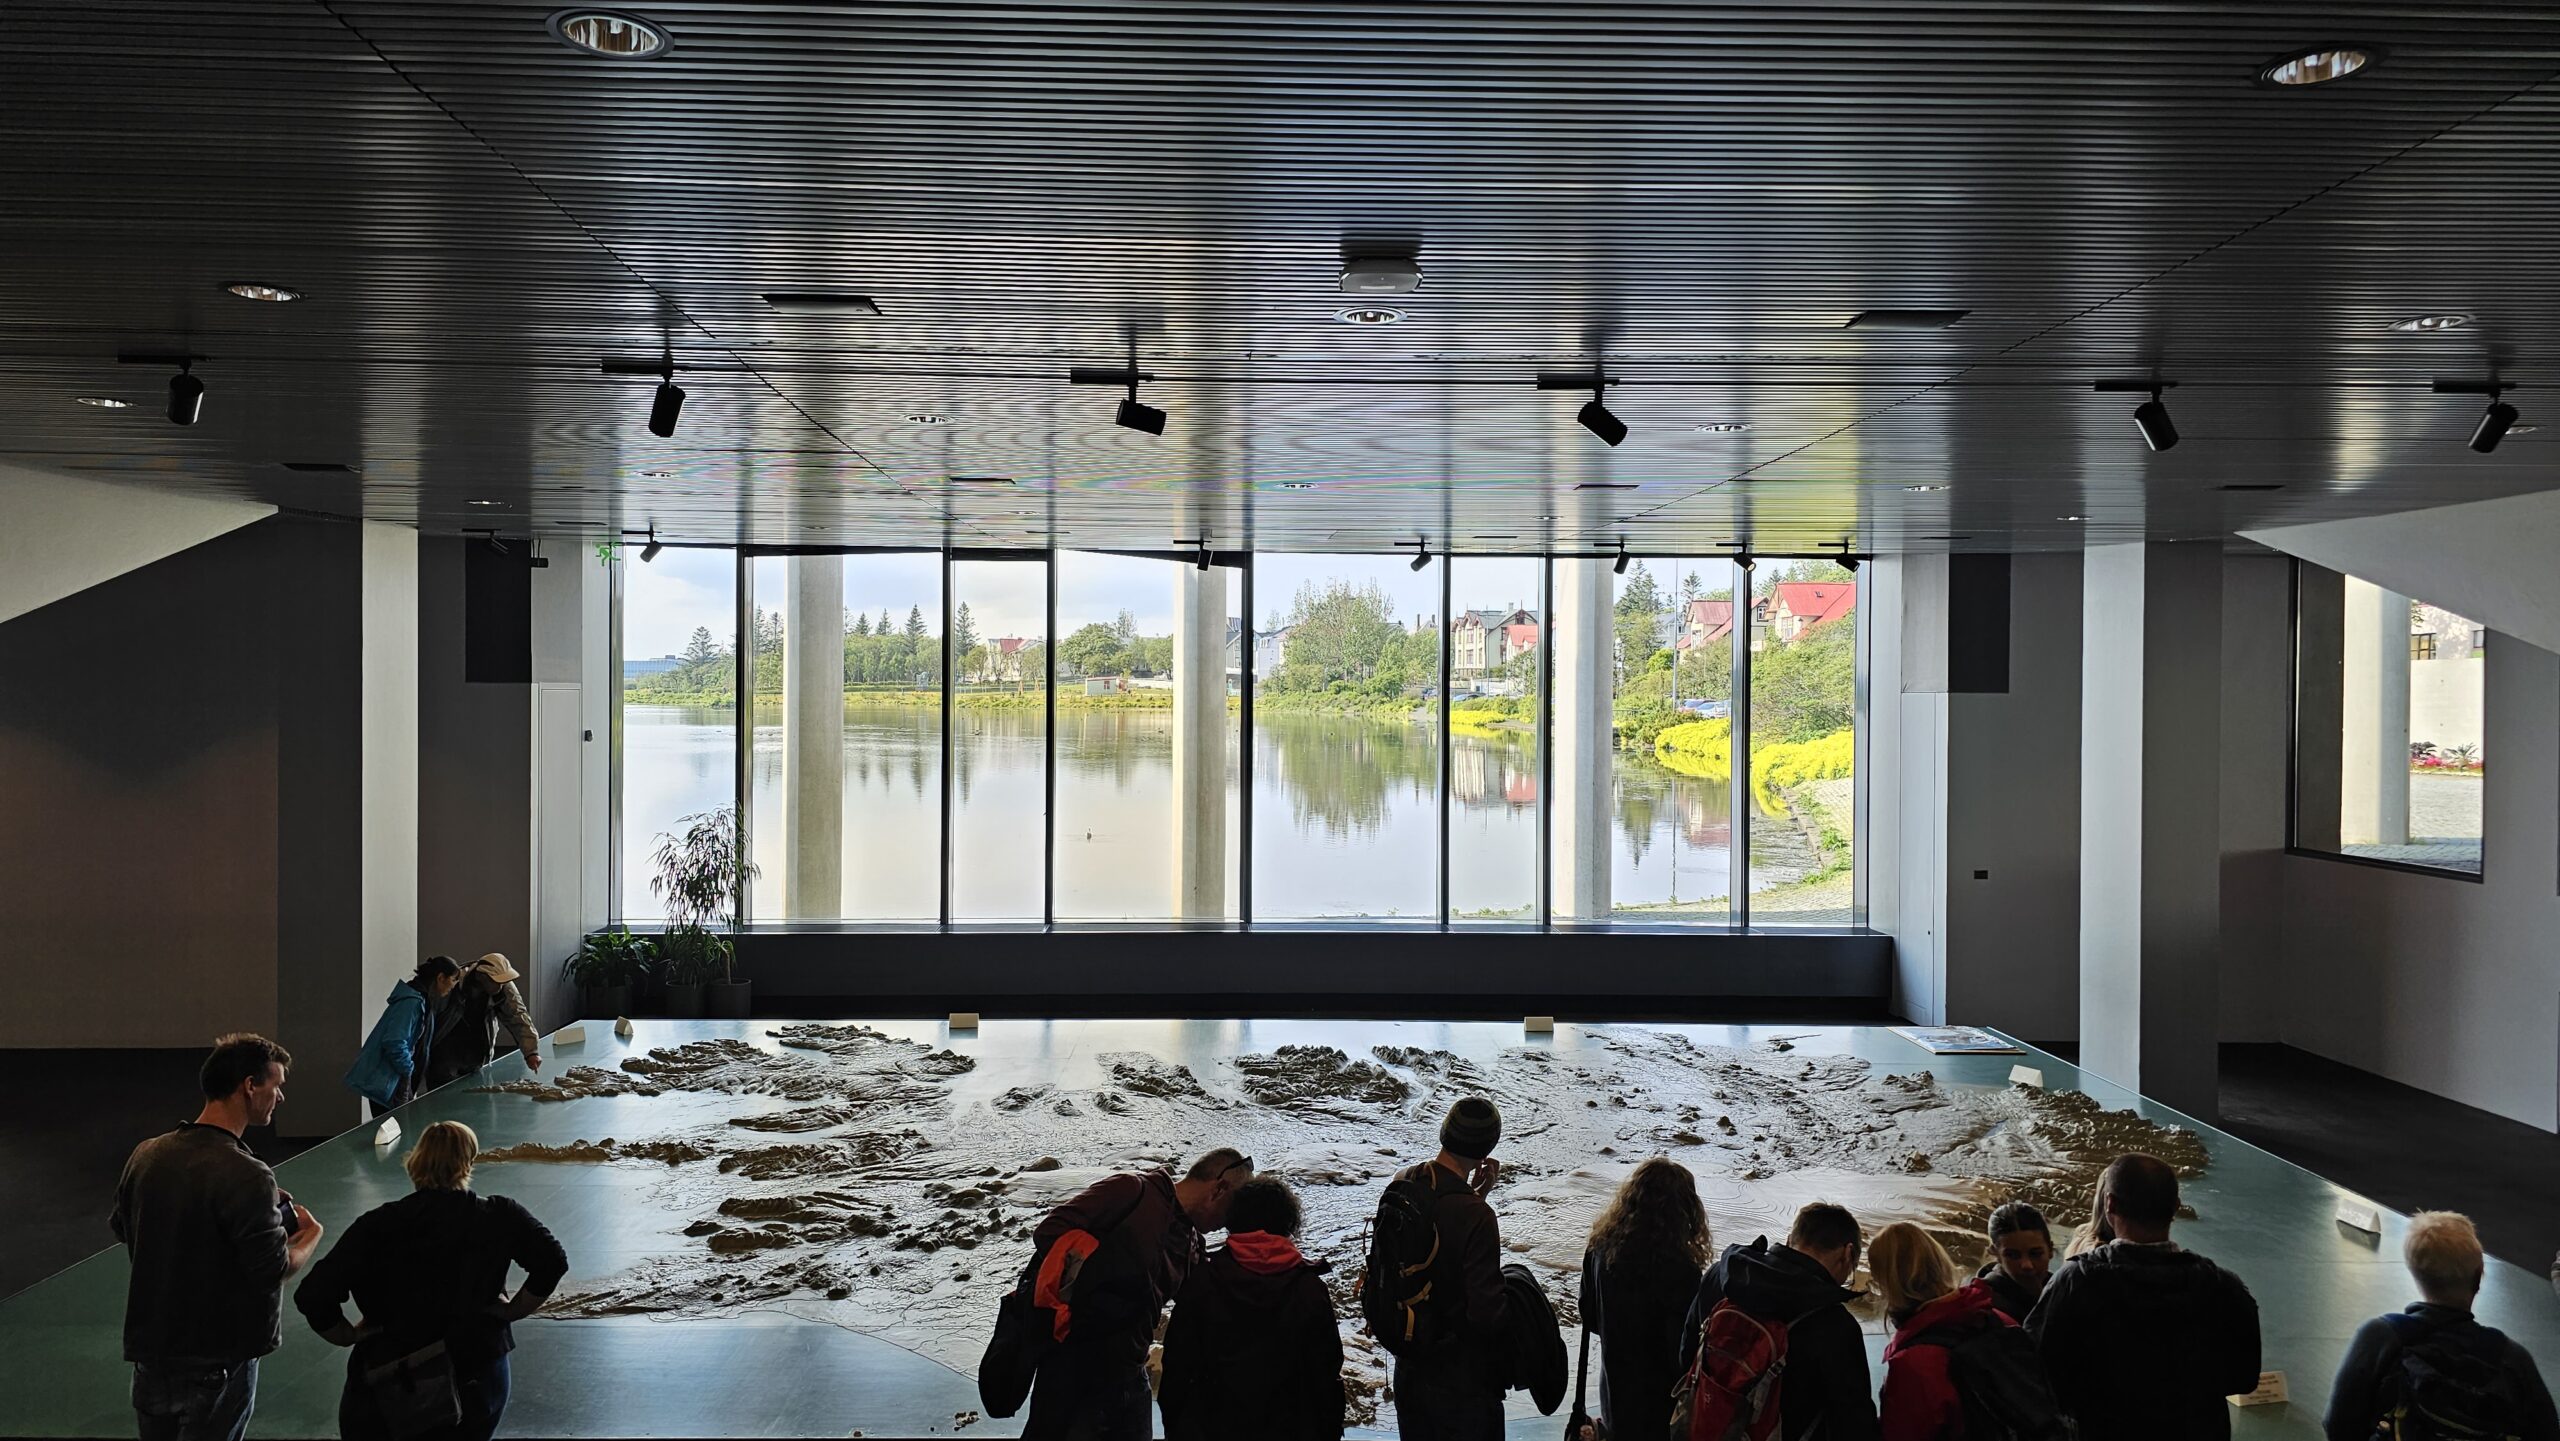 Inside the Reykjavik Pond City Hall